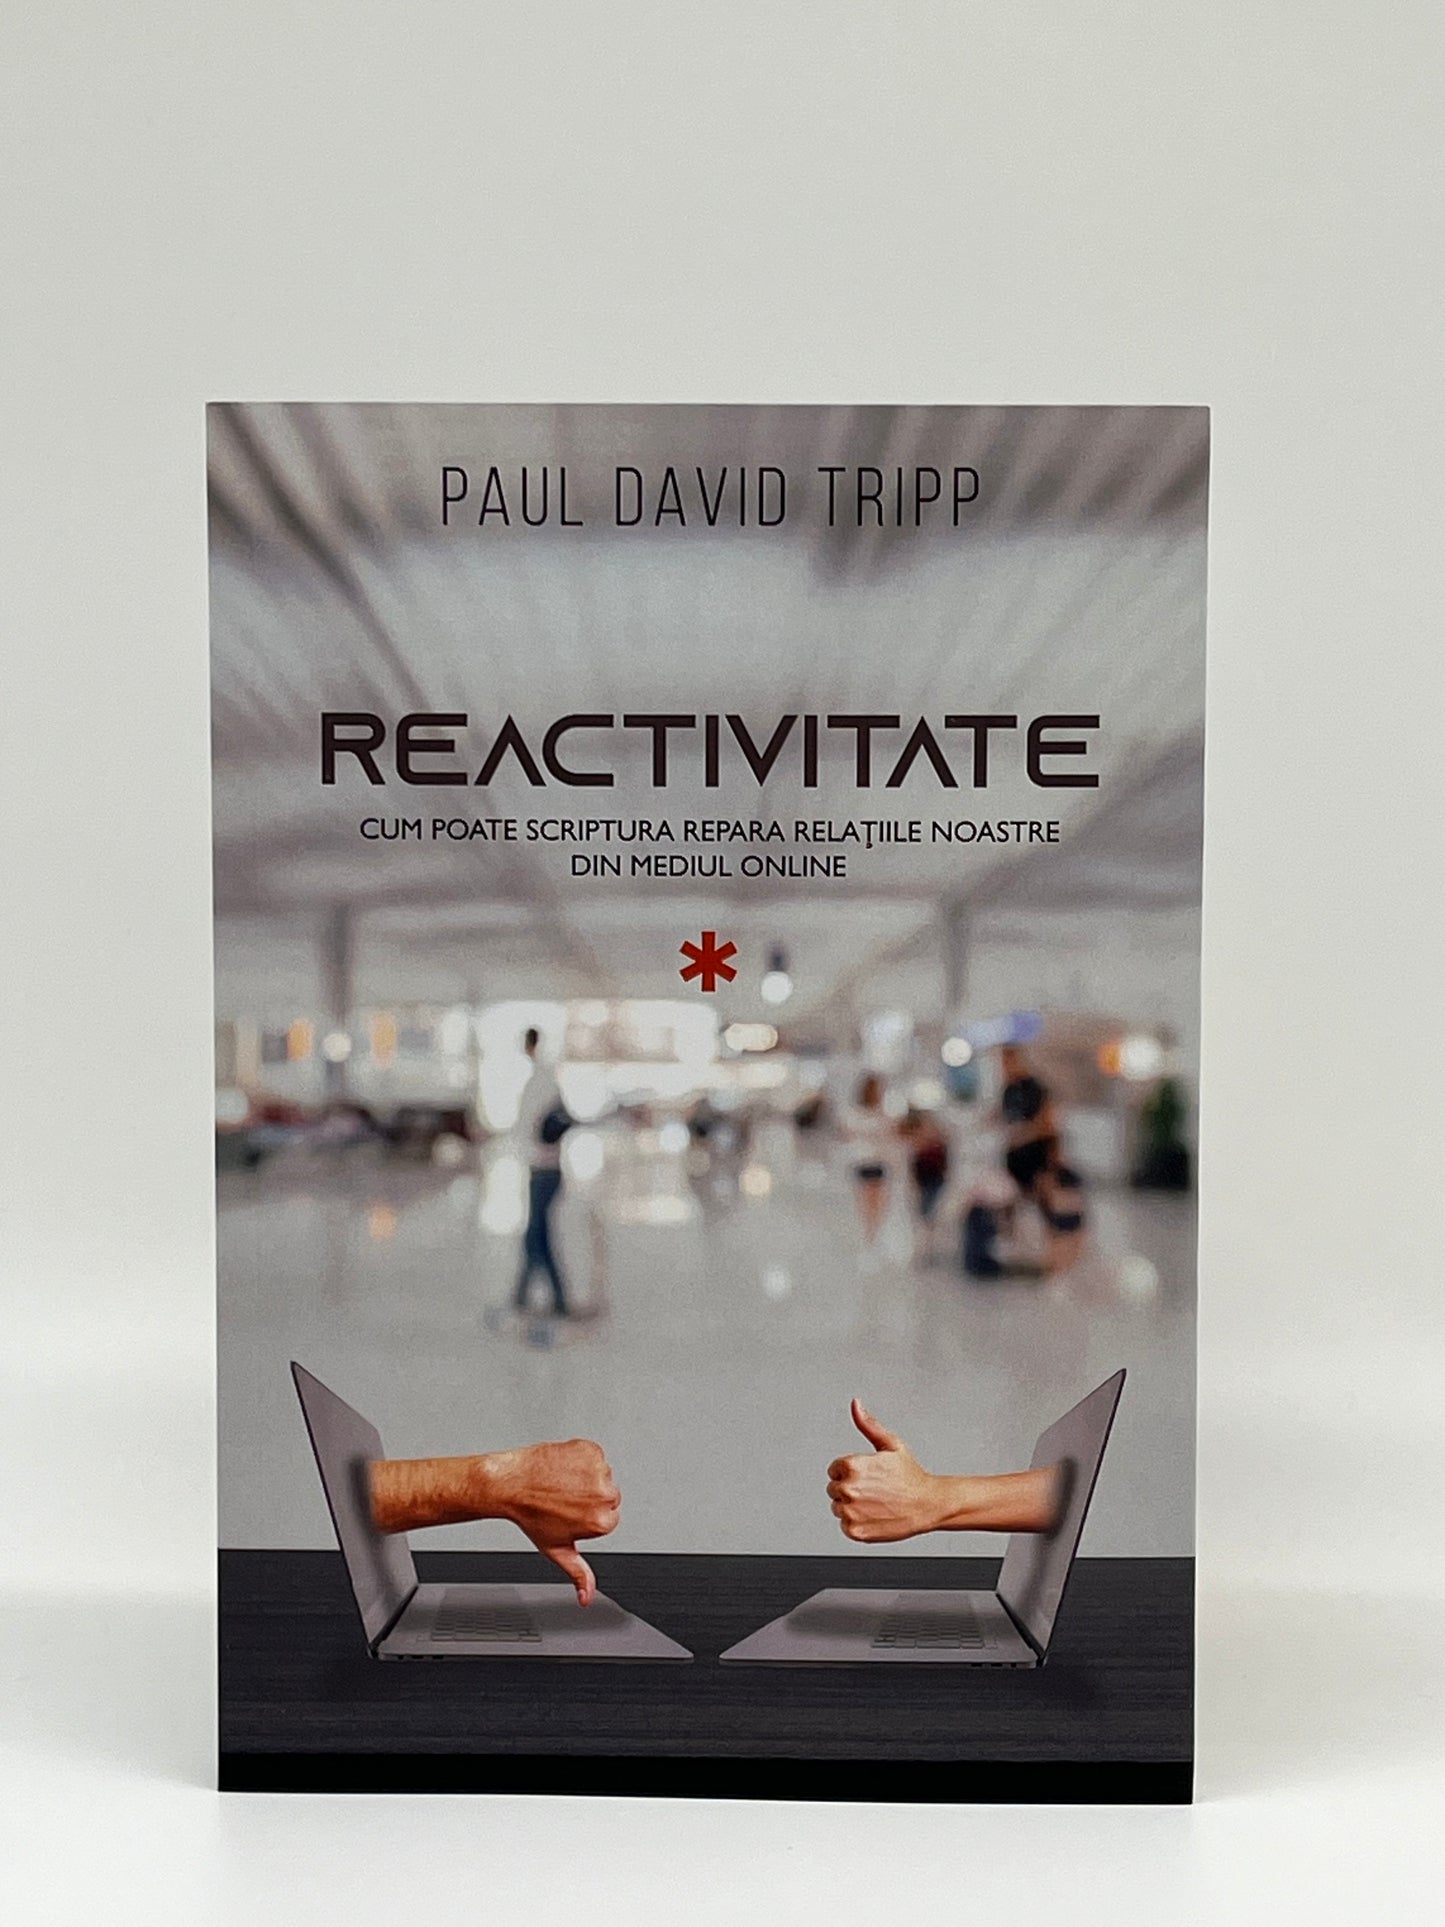 Reactivitate
- Paul David Tripp